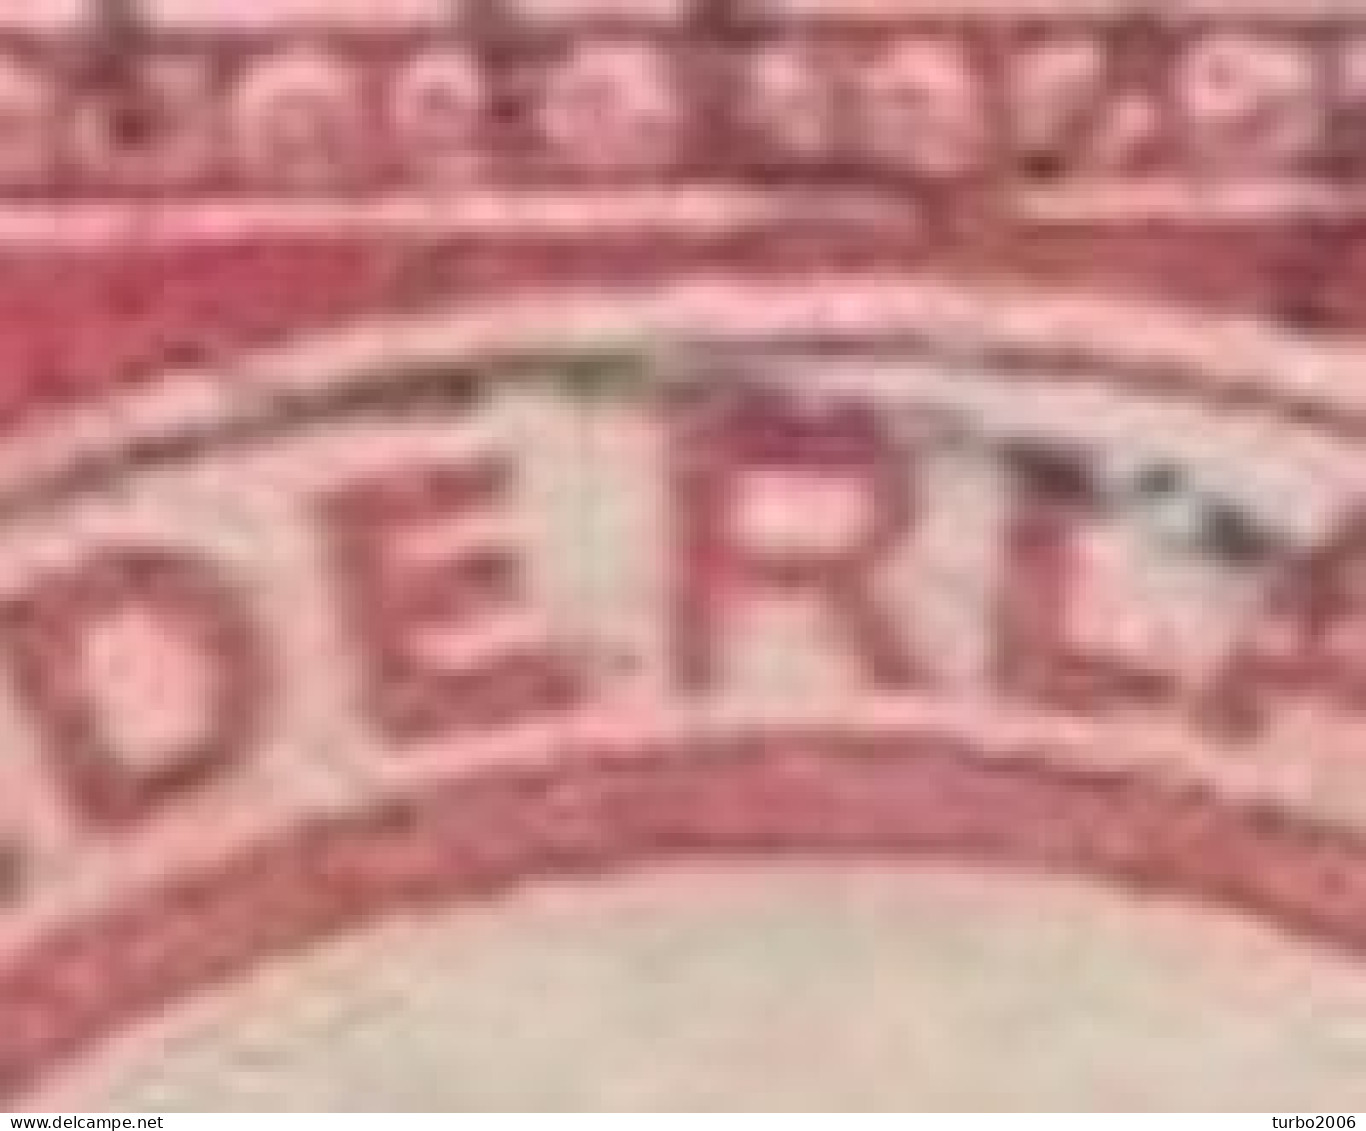 Plaatfout Rood Krasje Tussen De E En R Van NedERland In 1921-22 Cijferzegels 12½ Cent Rood NVPH 108 PM 1 - Variétés Et Curiosités